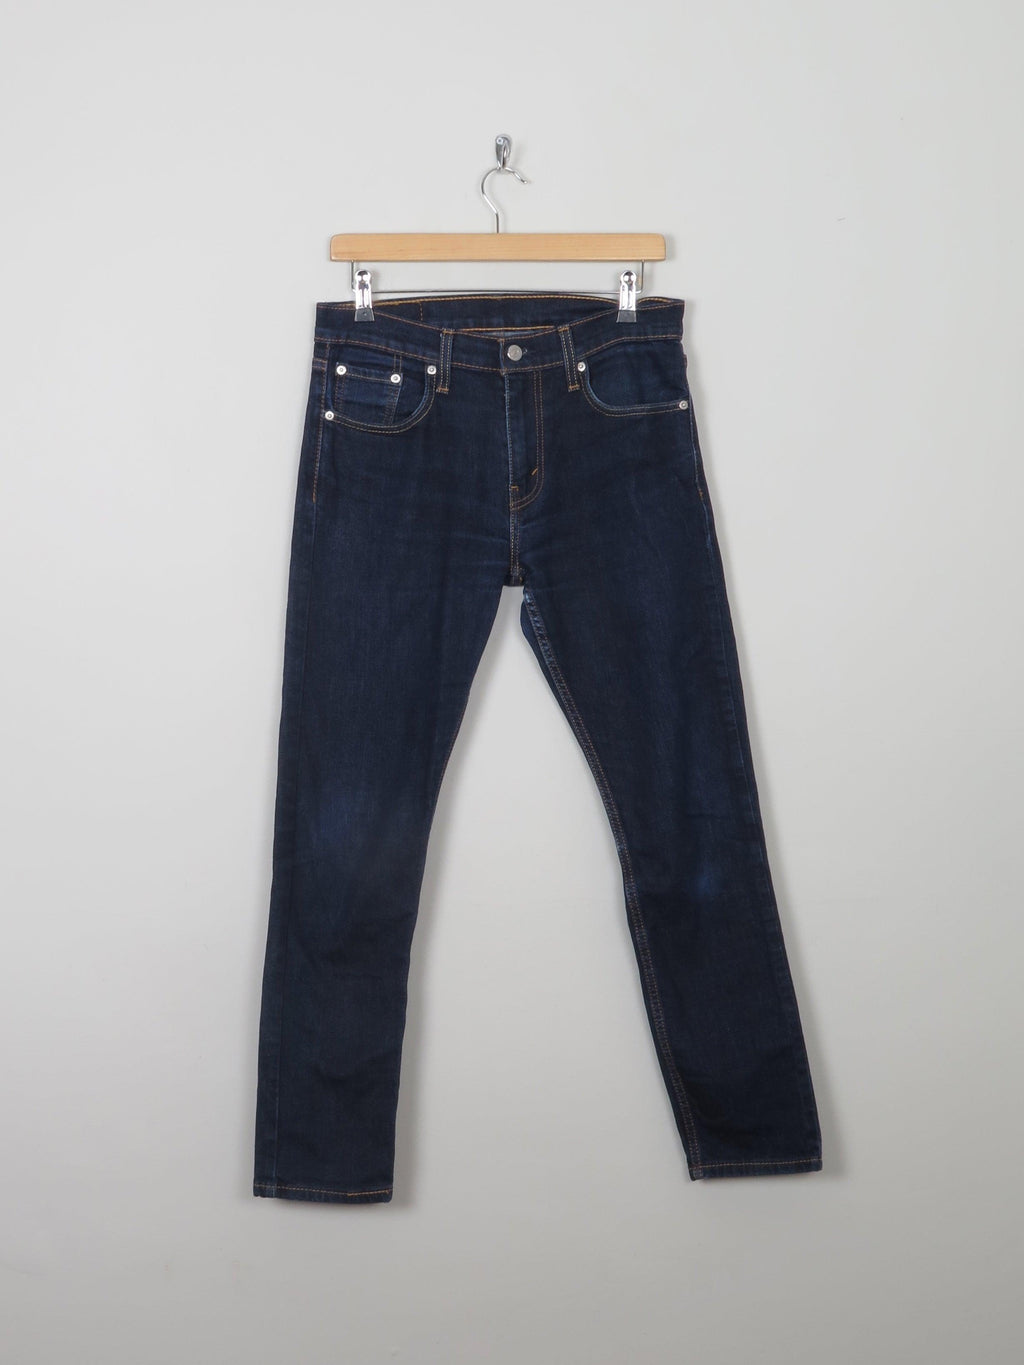 Men's Levi's Blue Stretch Jeans 30/30 512 - The Harlequin